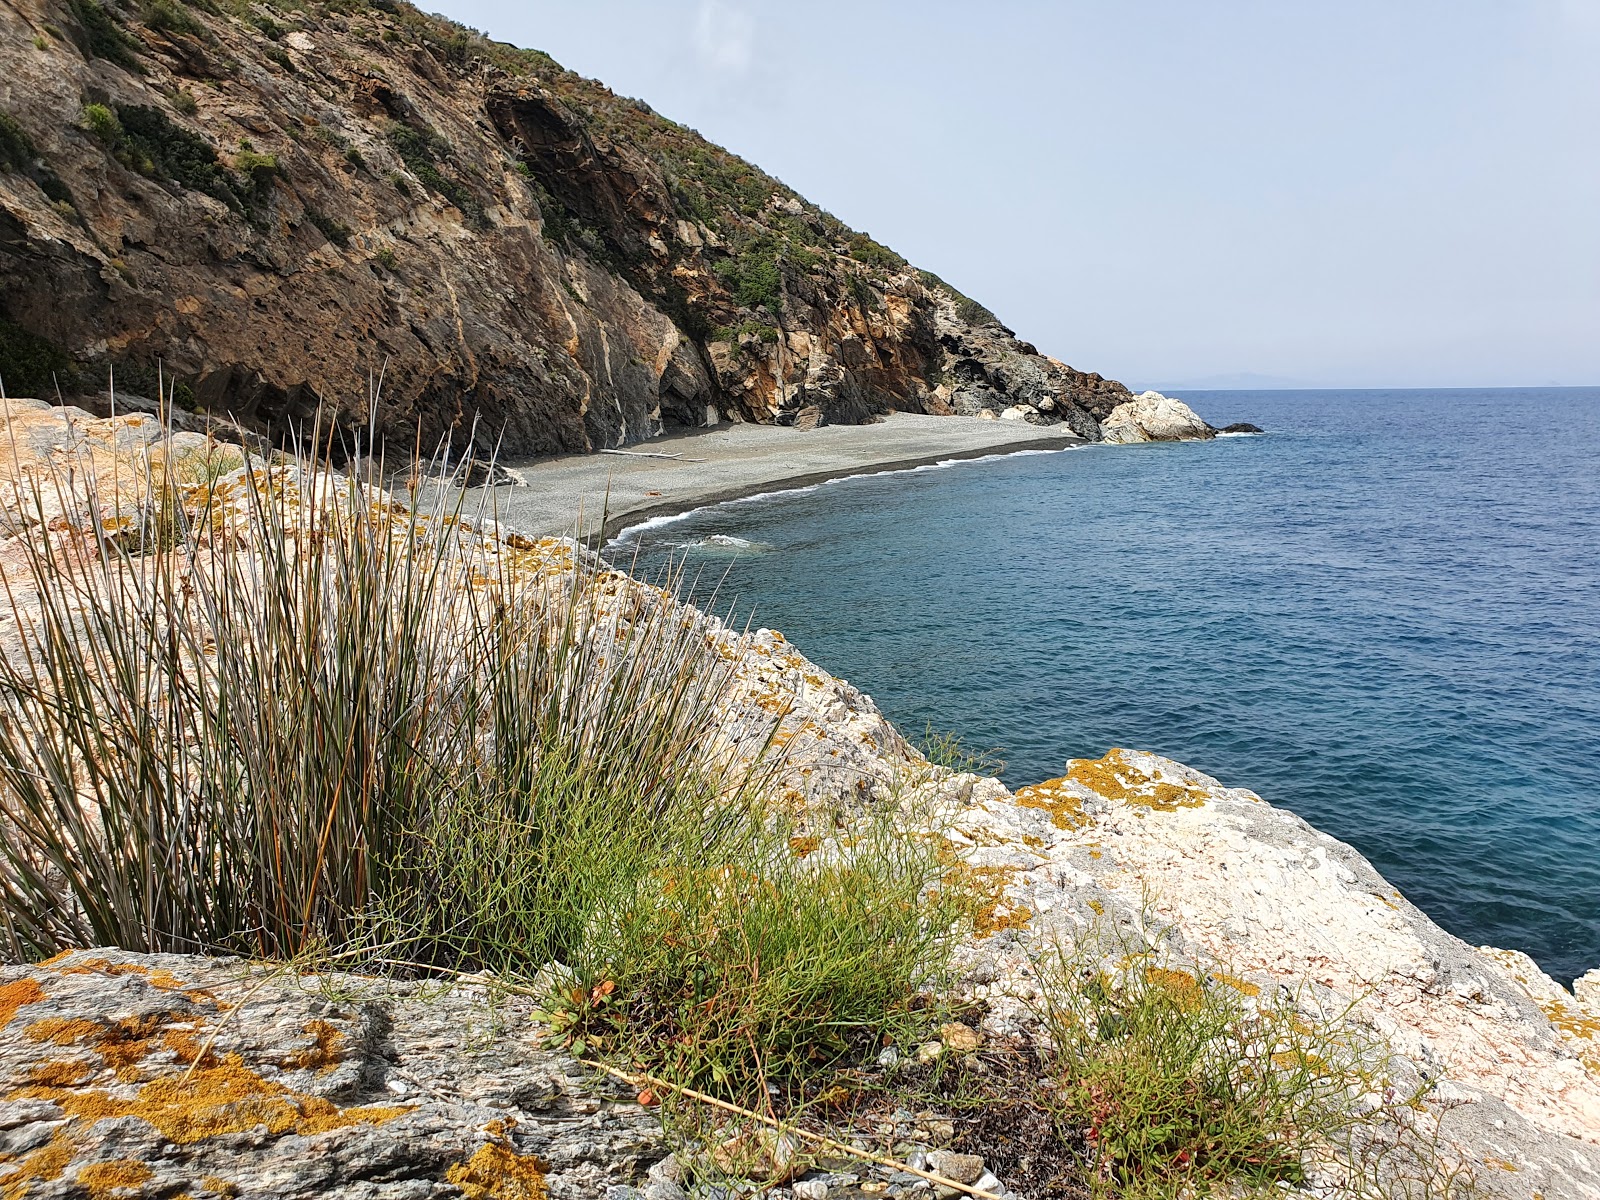 Spiaggia del Ginepro'in fotoğrafı doğrudan plaj ile birlikte